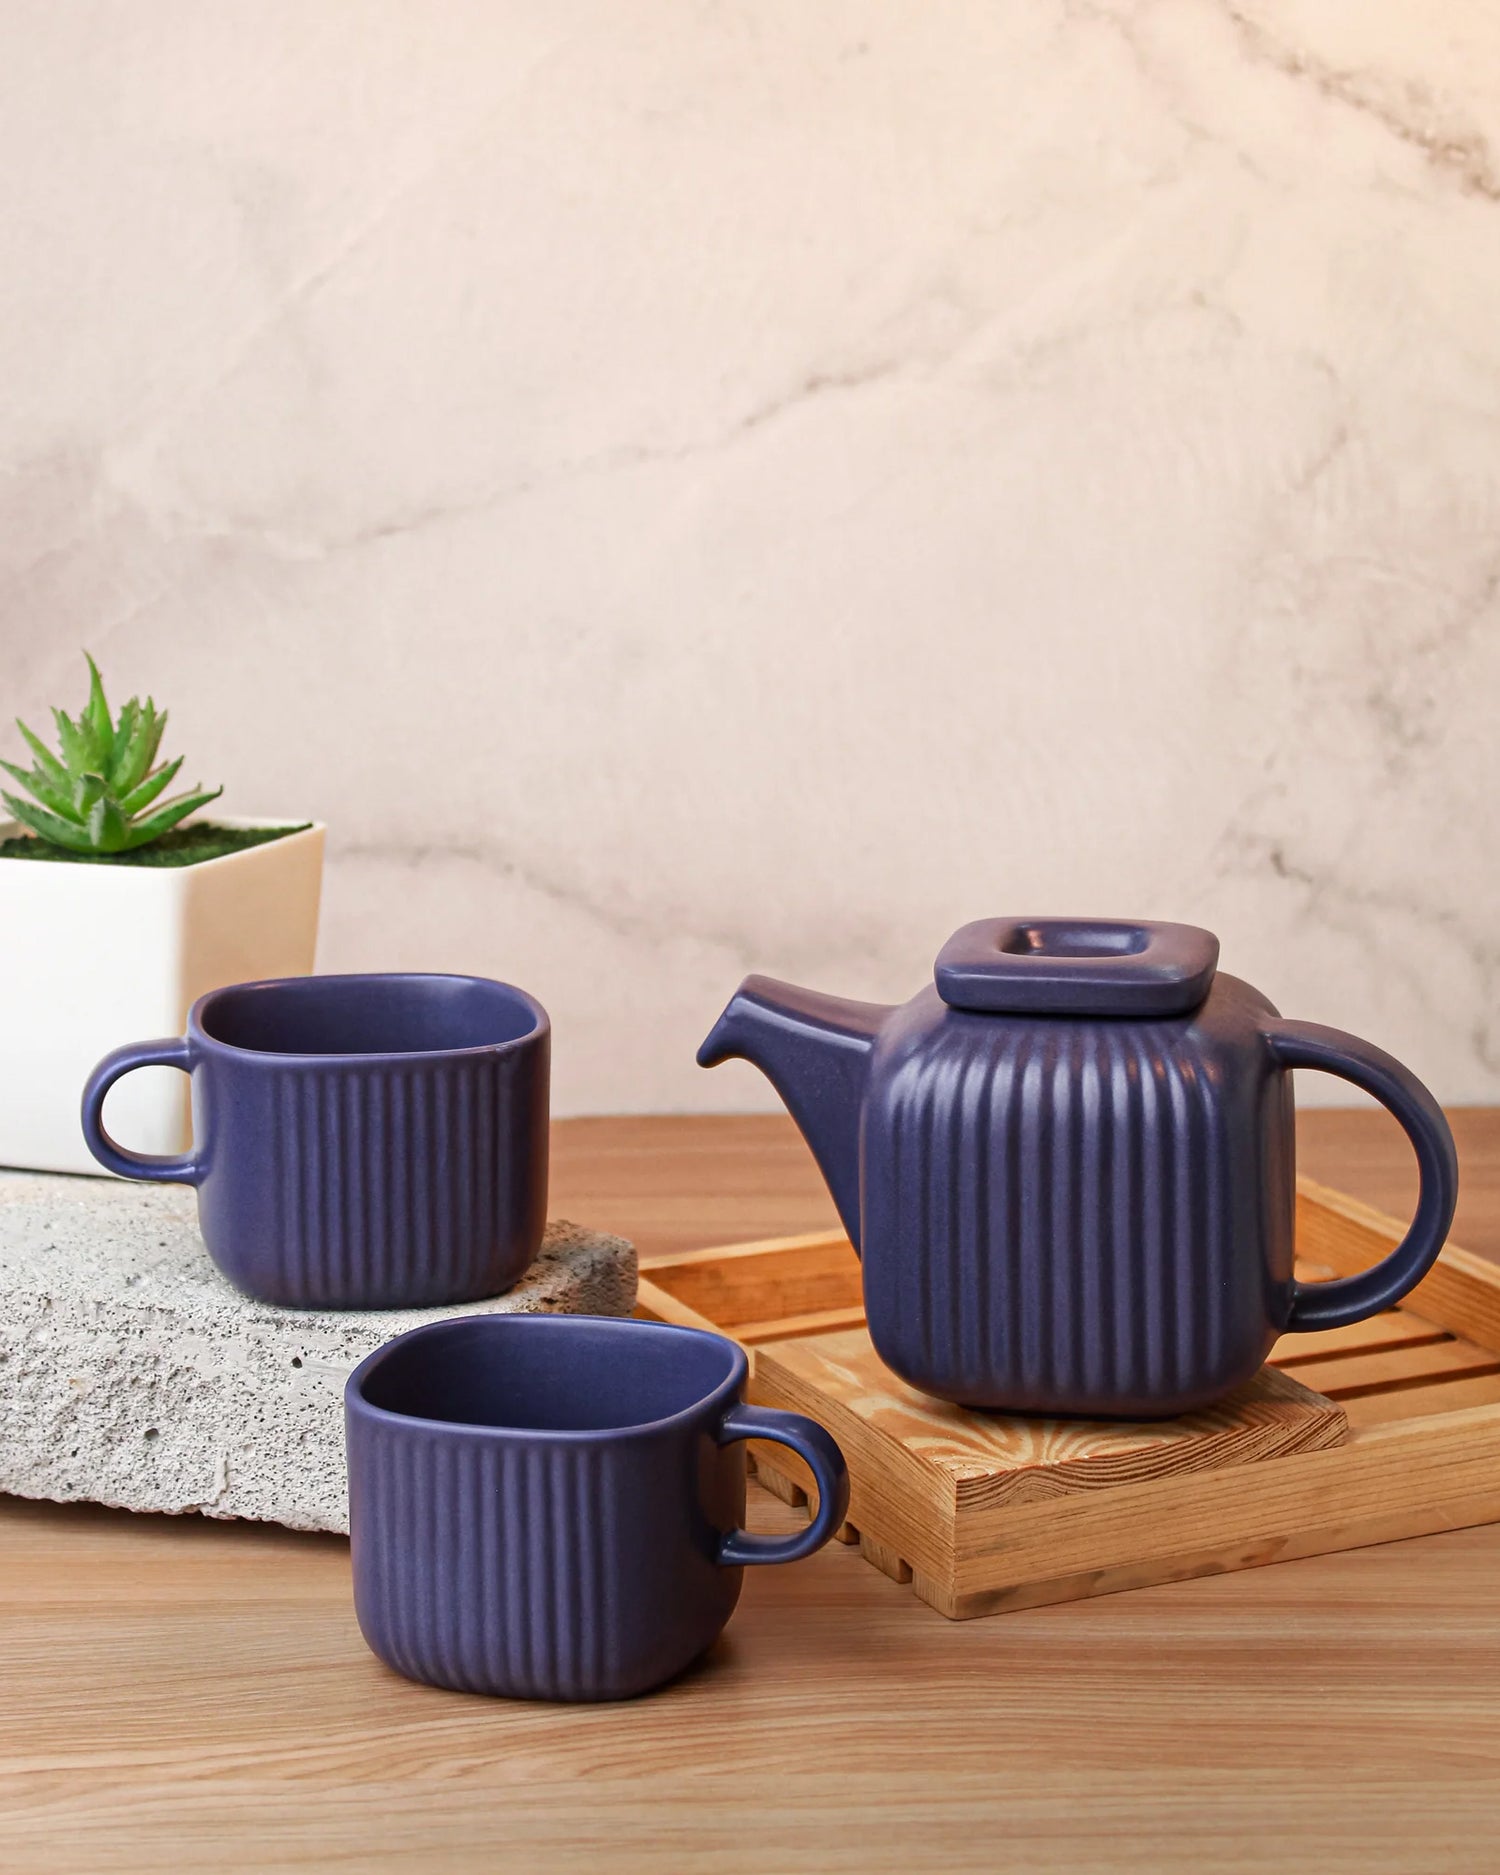 Opaque blue || Bloom Tea Trio: Elevate Your Tea Time